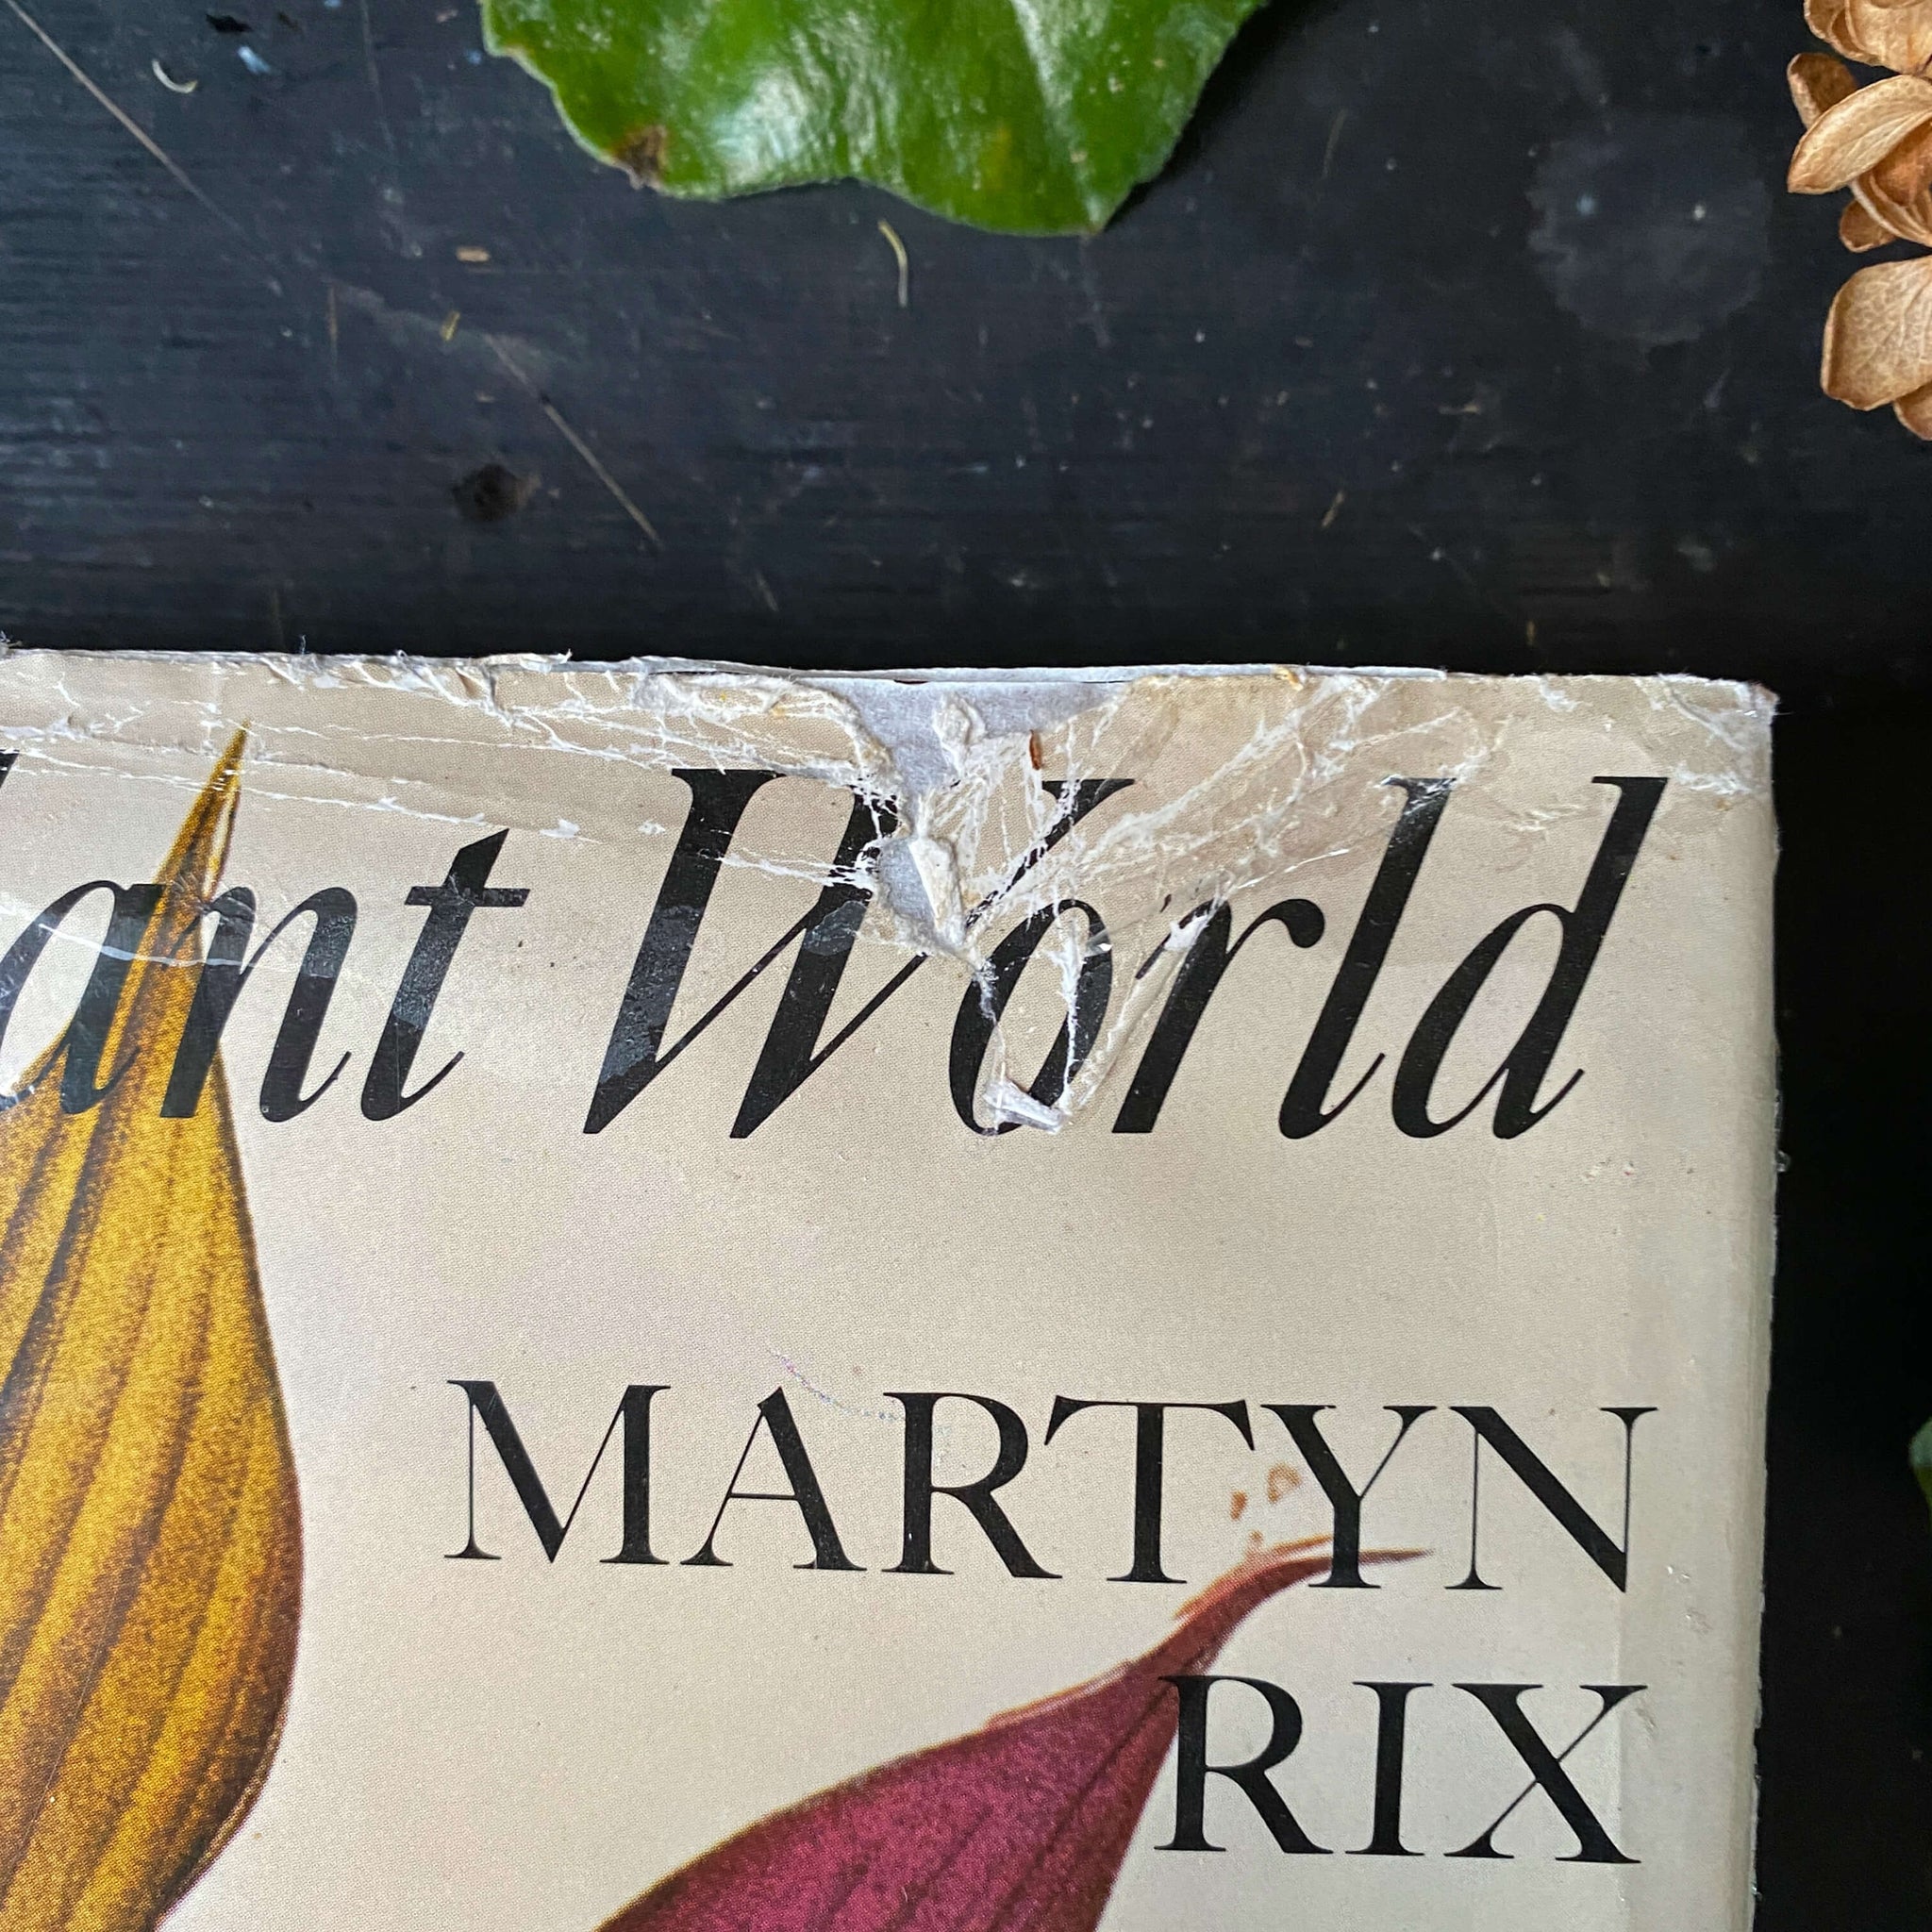 Vintage 1980s Botanical Art Book - The Art of The Plant World - Martin Rix - 1981 Edition